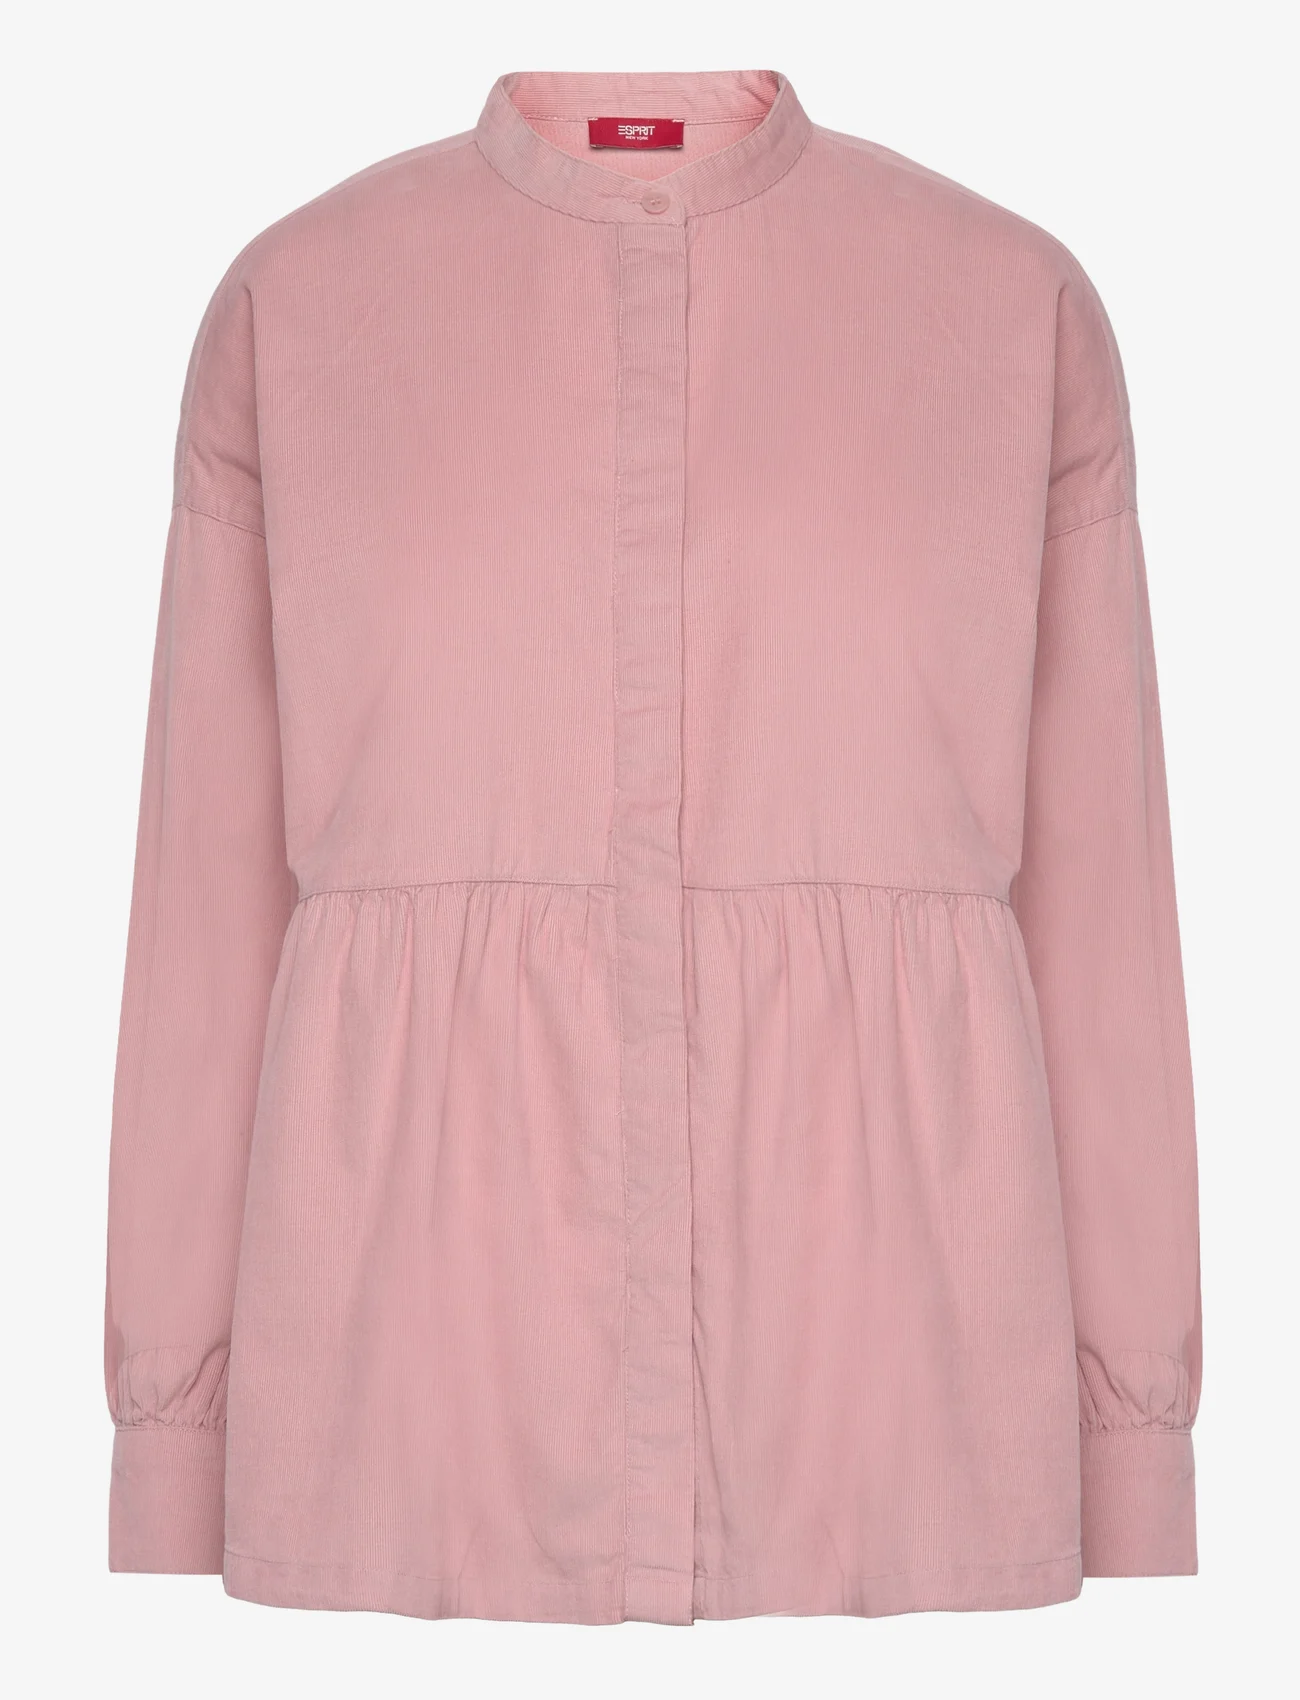 Esprit Casual - Women Blouses woven long sleeve - palaidinės ilgomis rankovėmis - old pink - 0